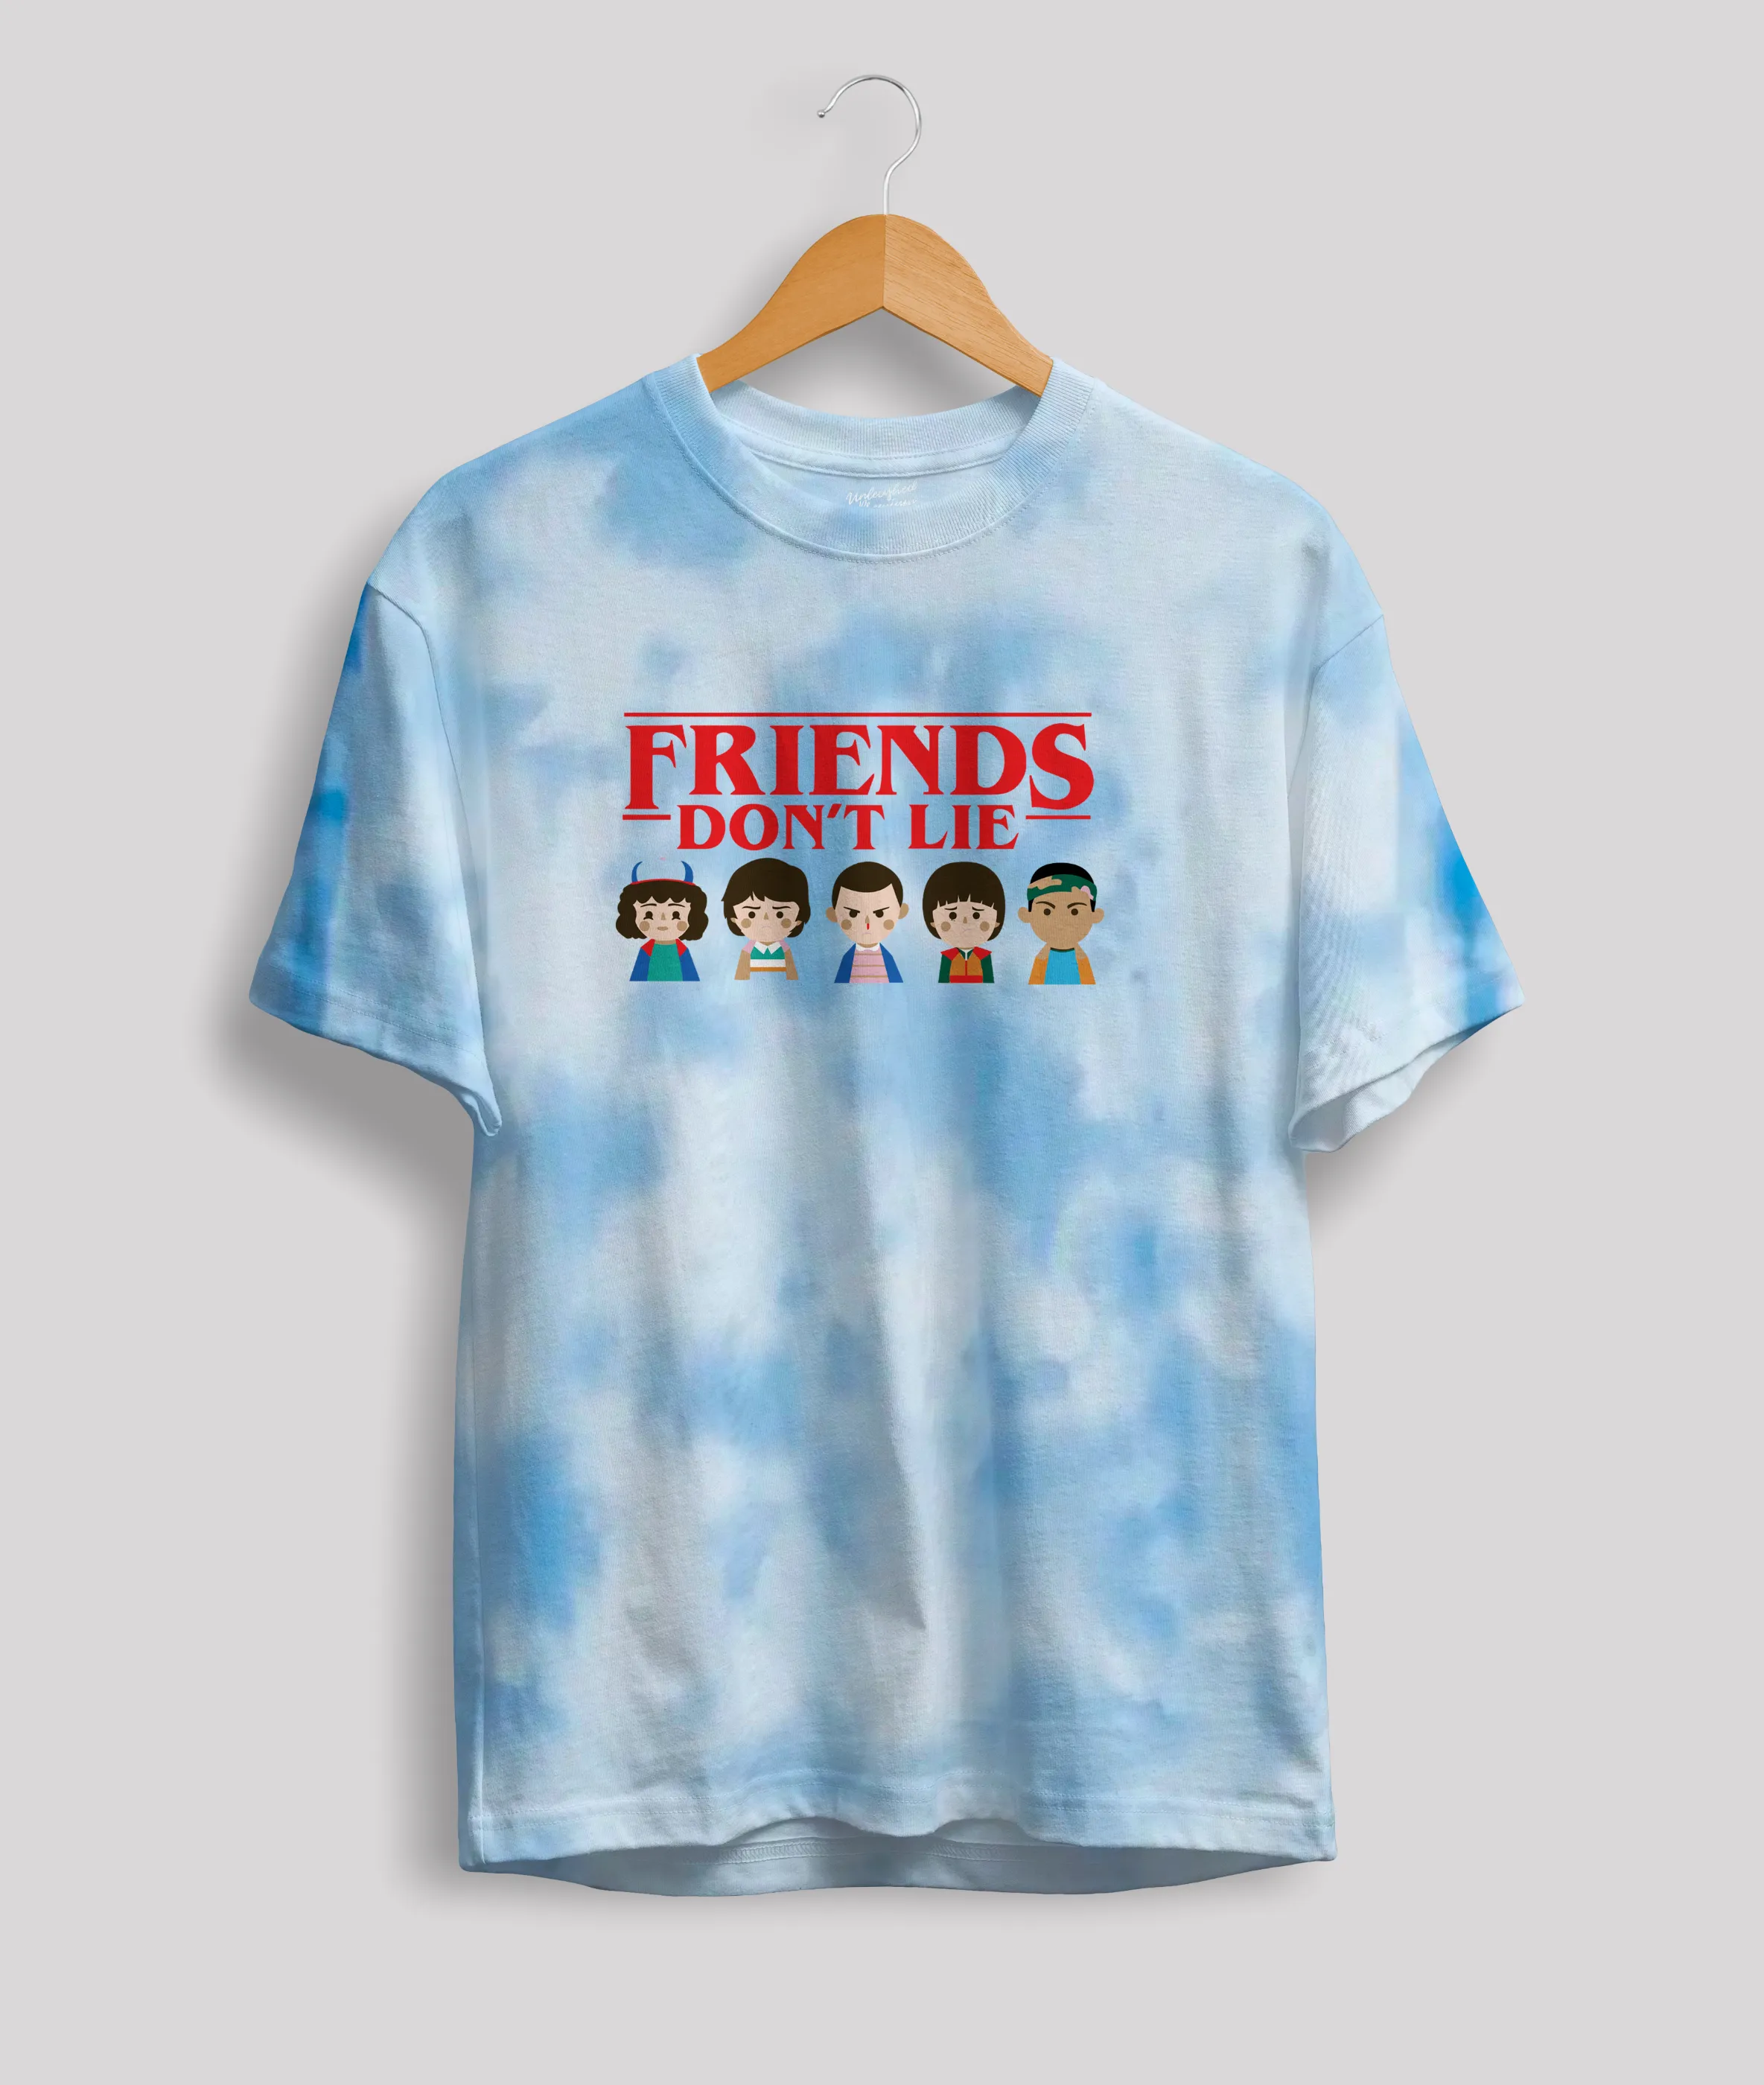 Stranger Things friend's don't lie t-shirt